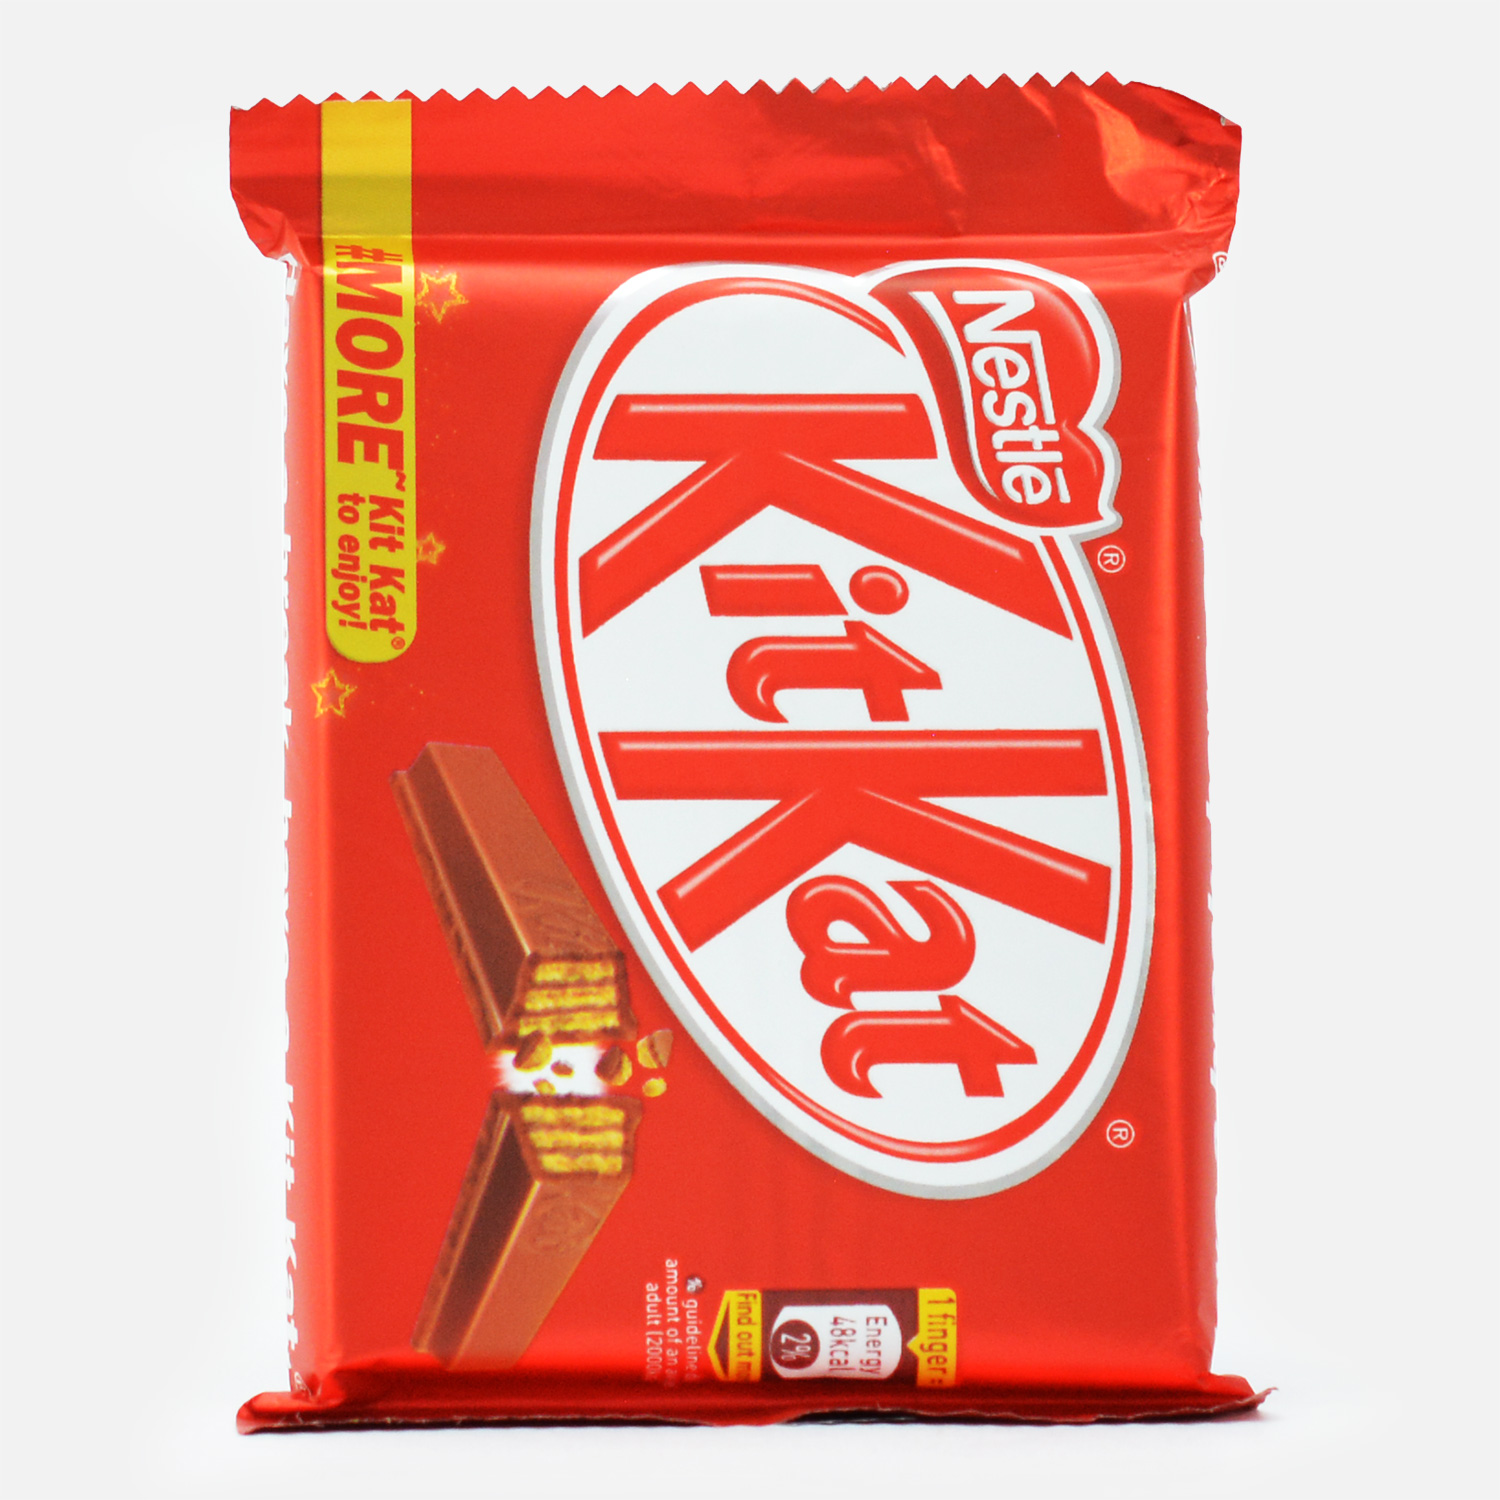 Delicious Nestle Kitkat Pack - Have a break